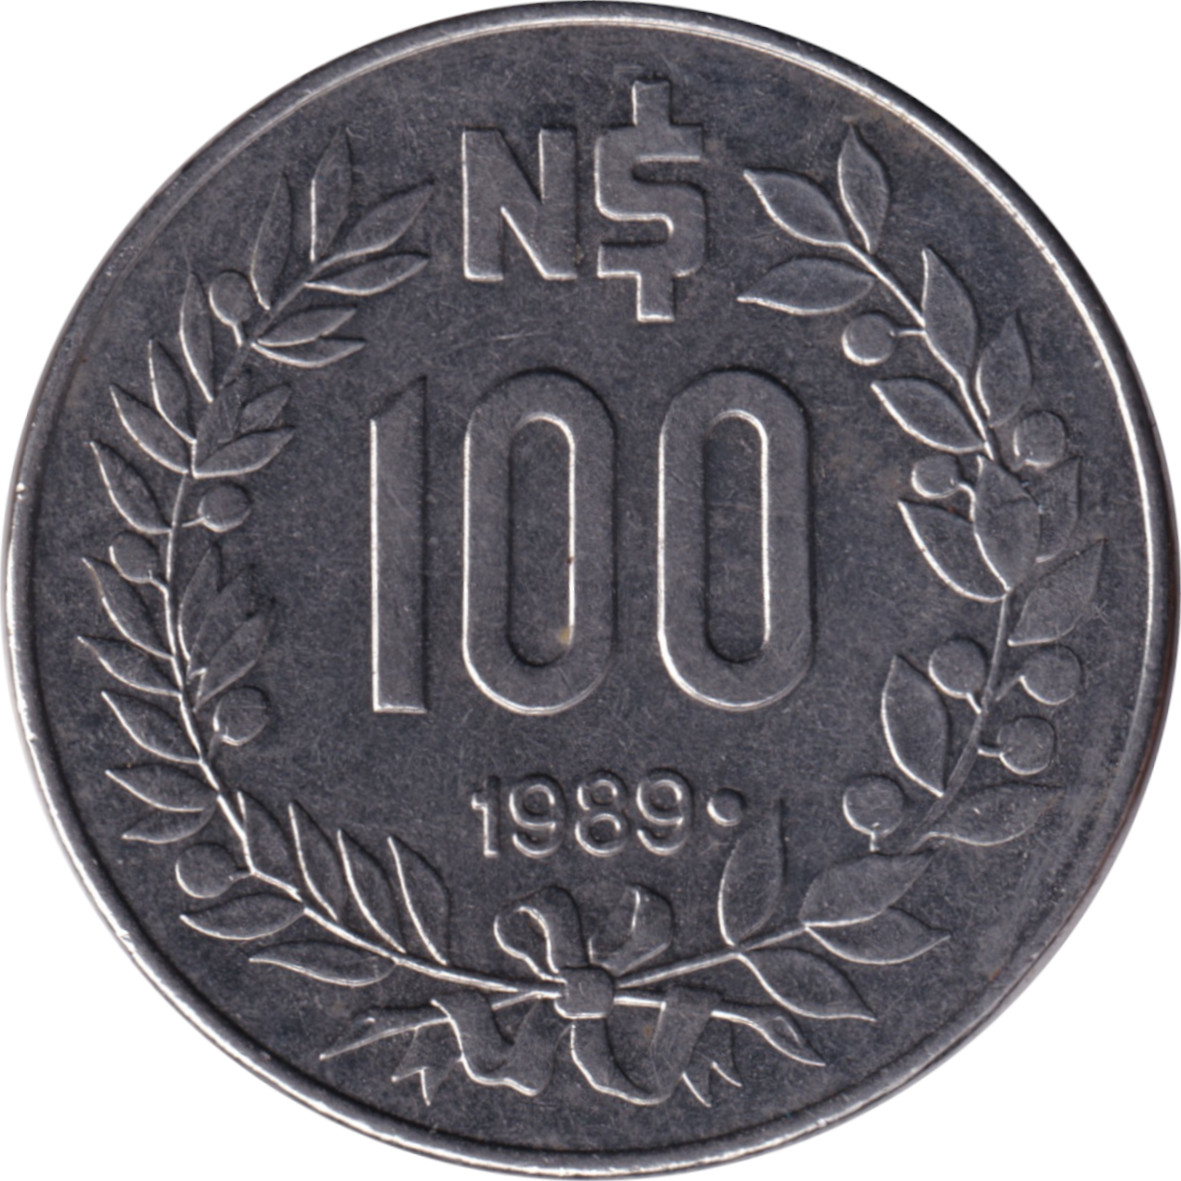 100 pesos - Gaucho